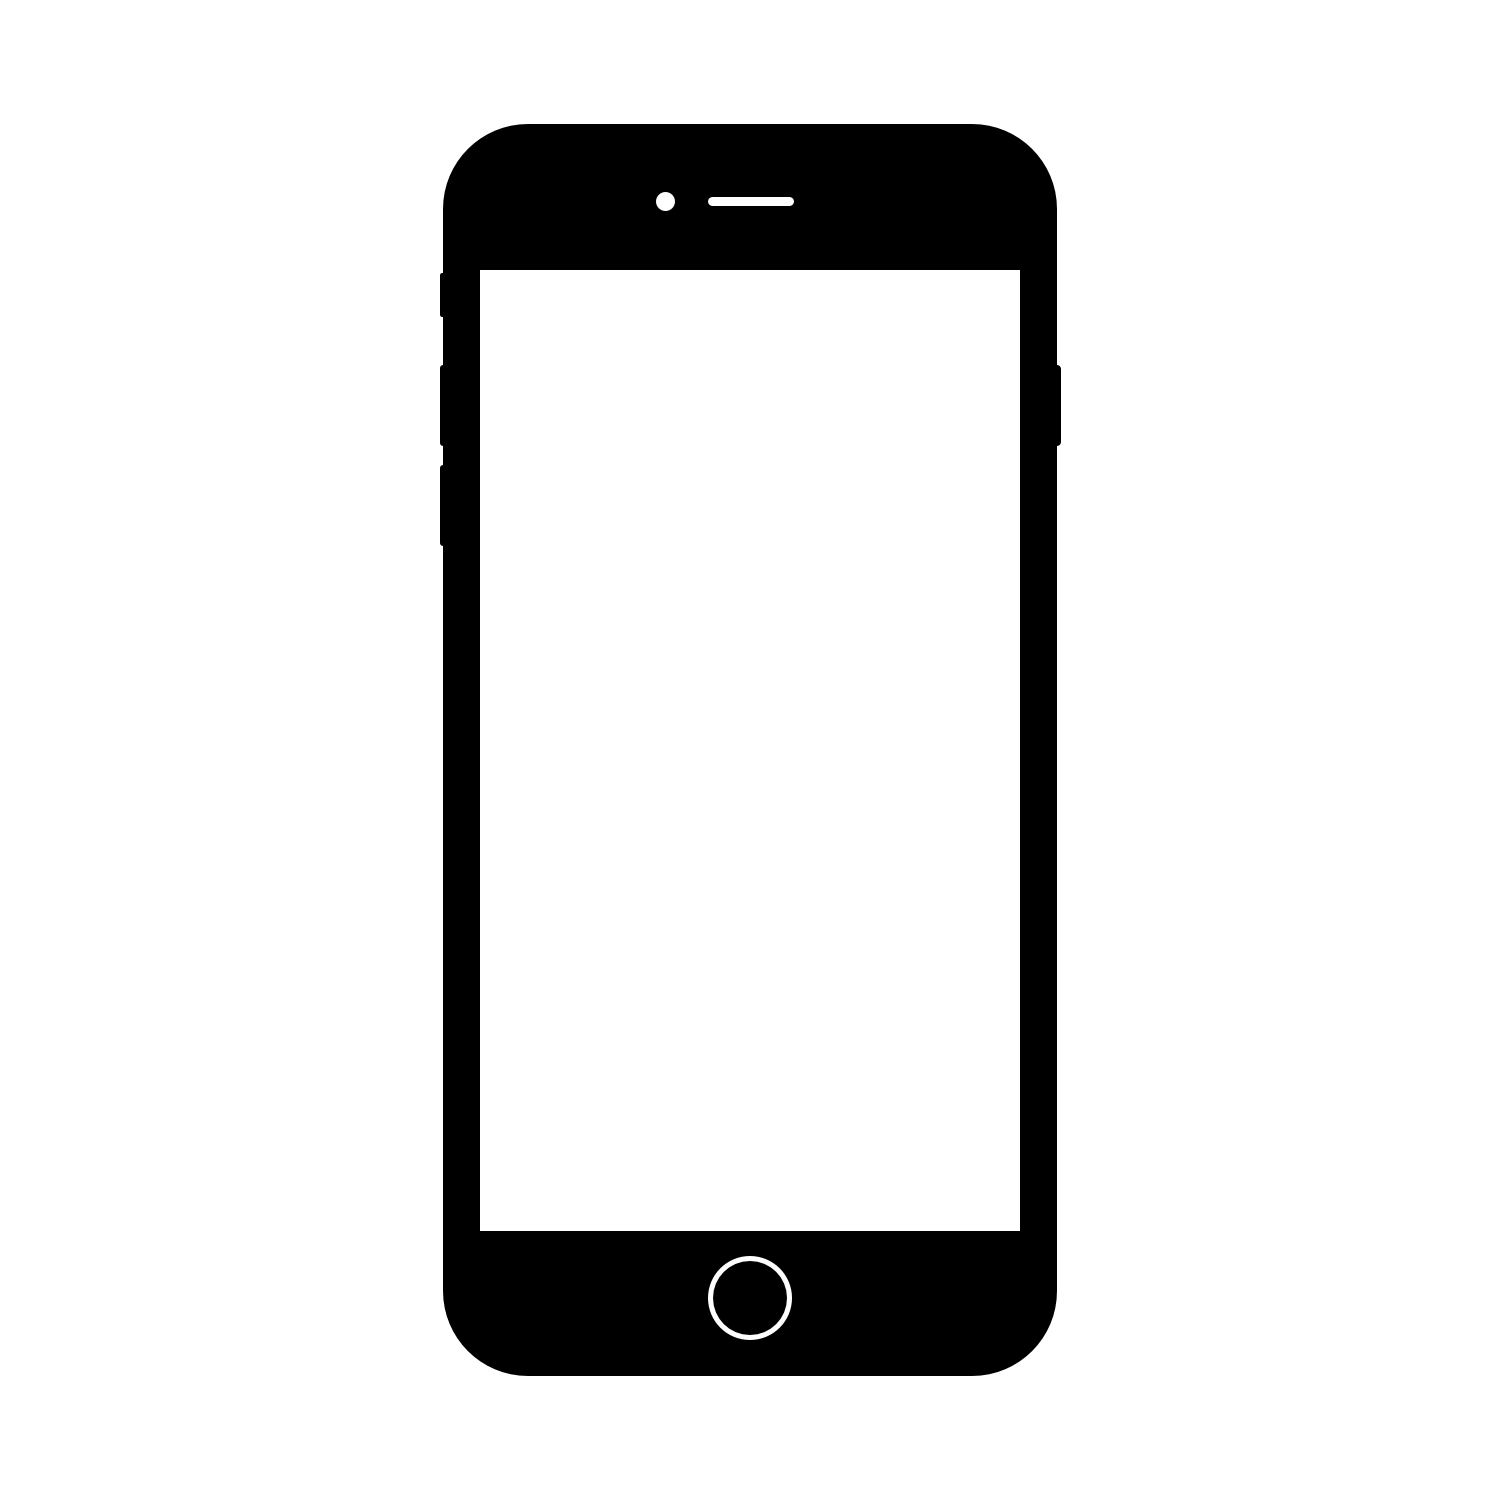 Apple Iphone 6 Plus Symbol Wallpaper - Iphone 6 White Background - HD Wallpaper 